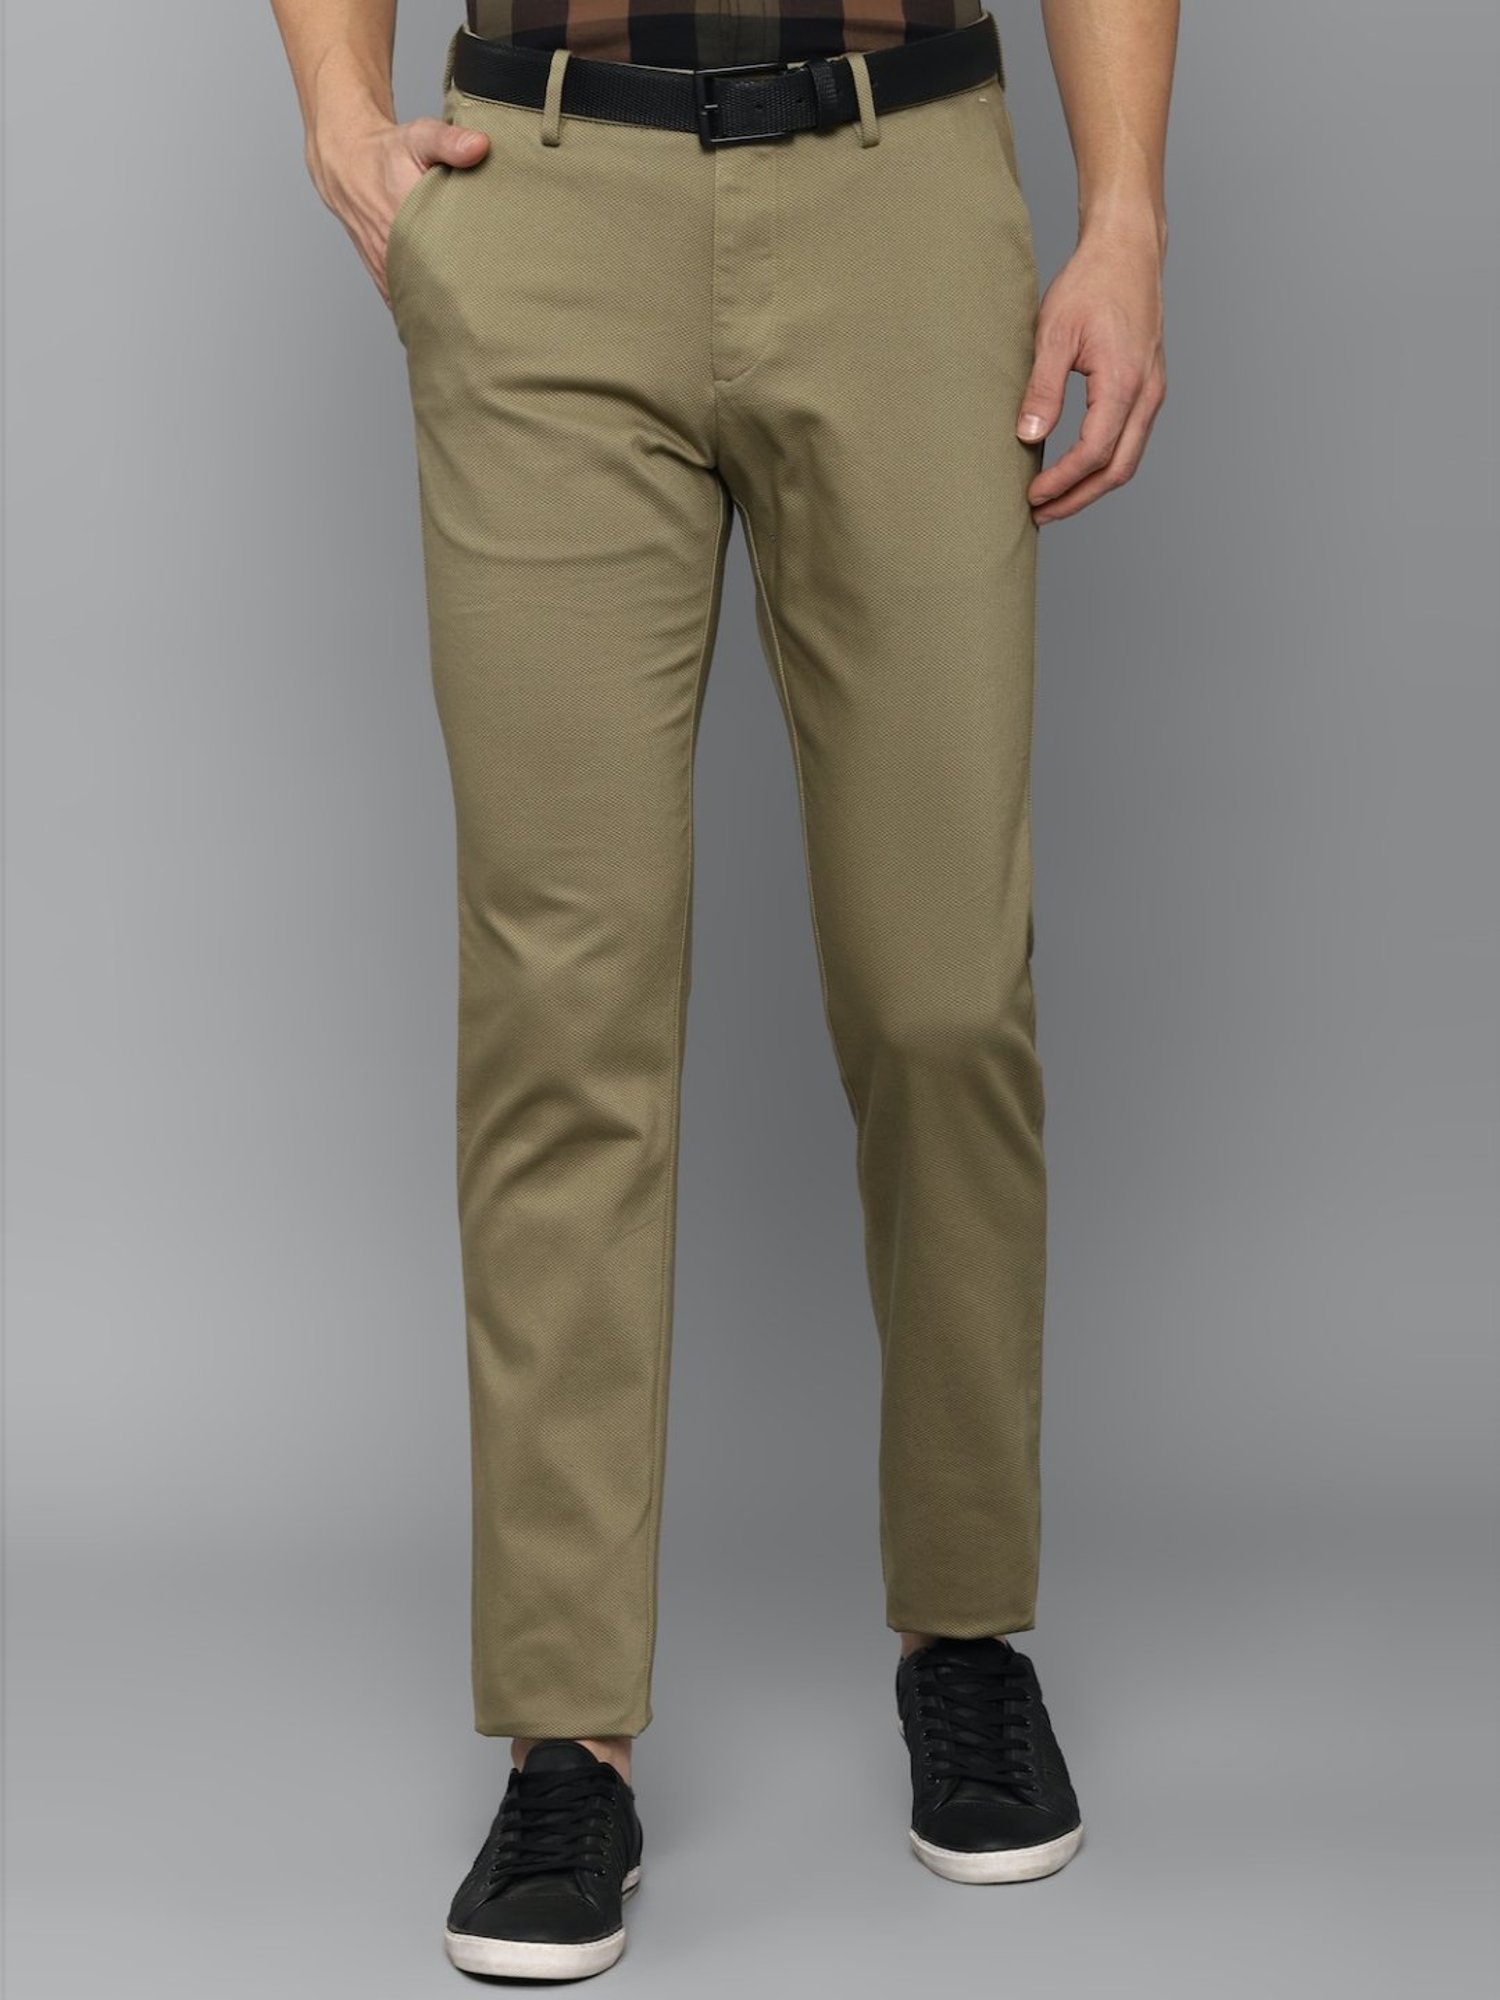 Buy Allen Solly Men Solid Regular Fit Formal Trouser  Beige Online at Low  Prices in India  Paytmmallcom